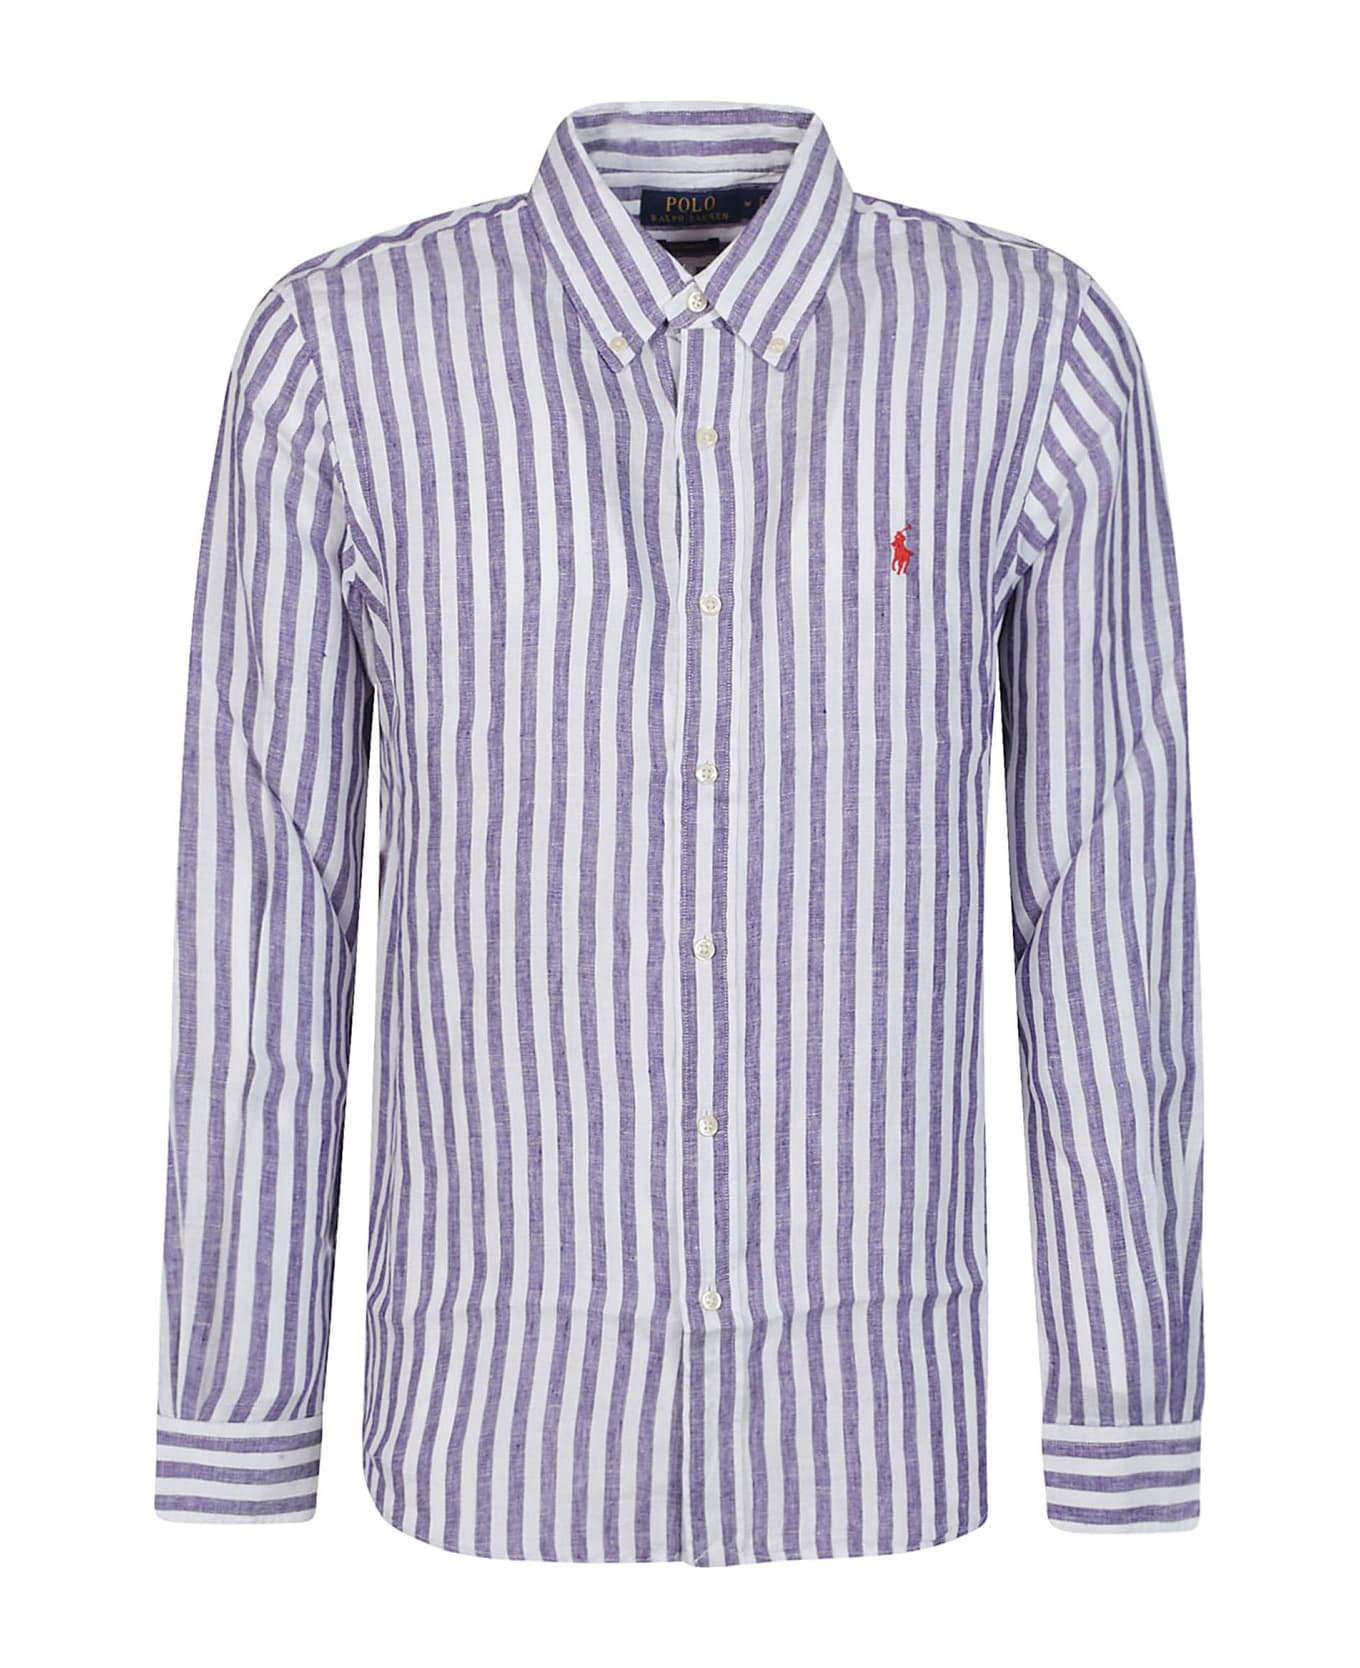 Polo Ralph Lauren Long Sleeve Shirt - Blue/white